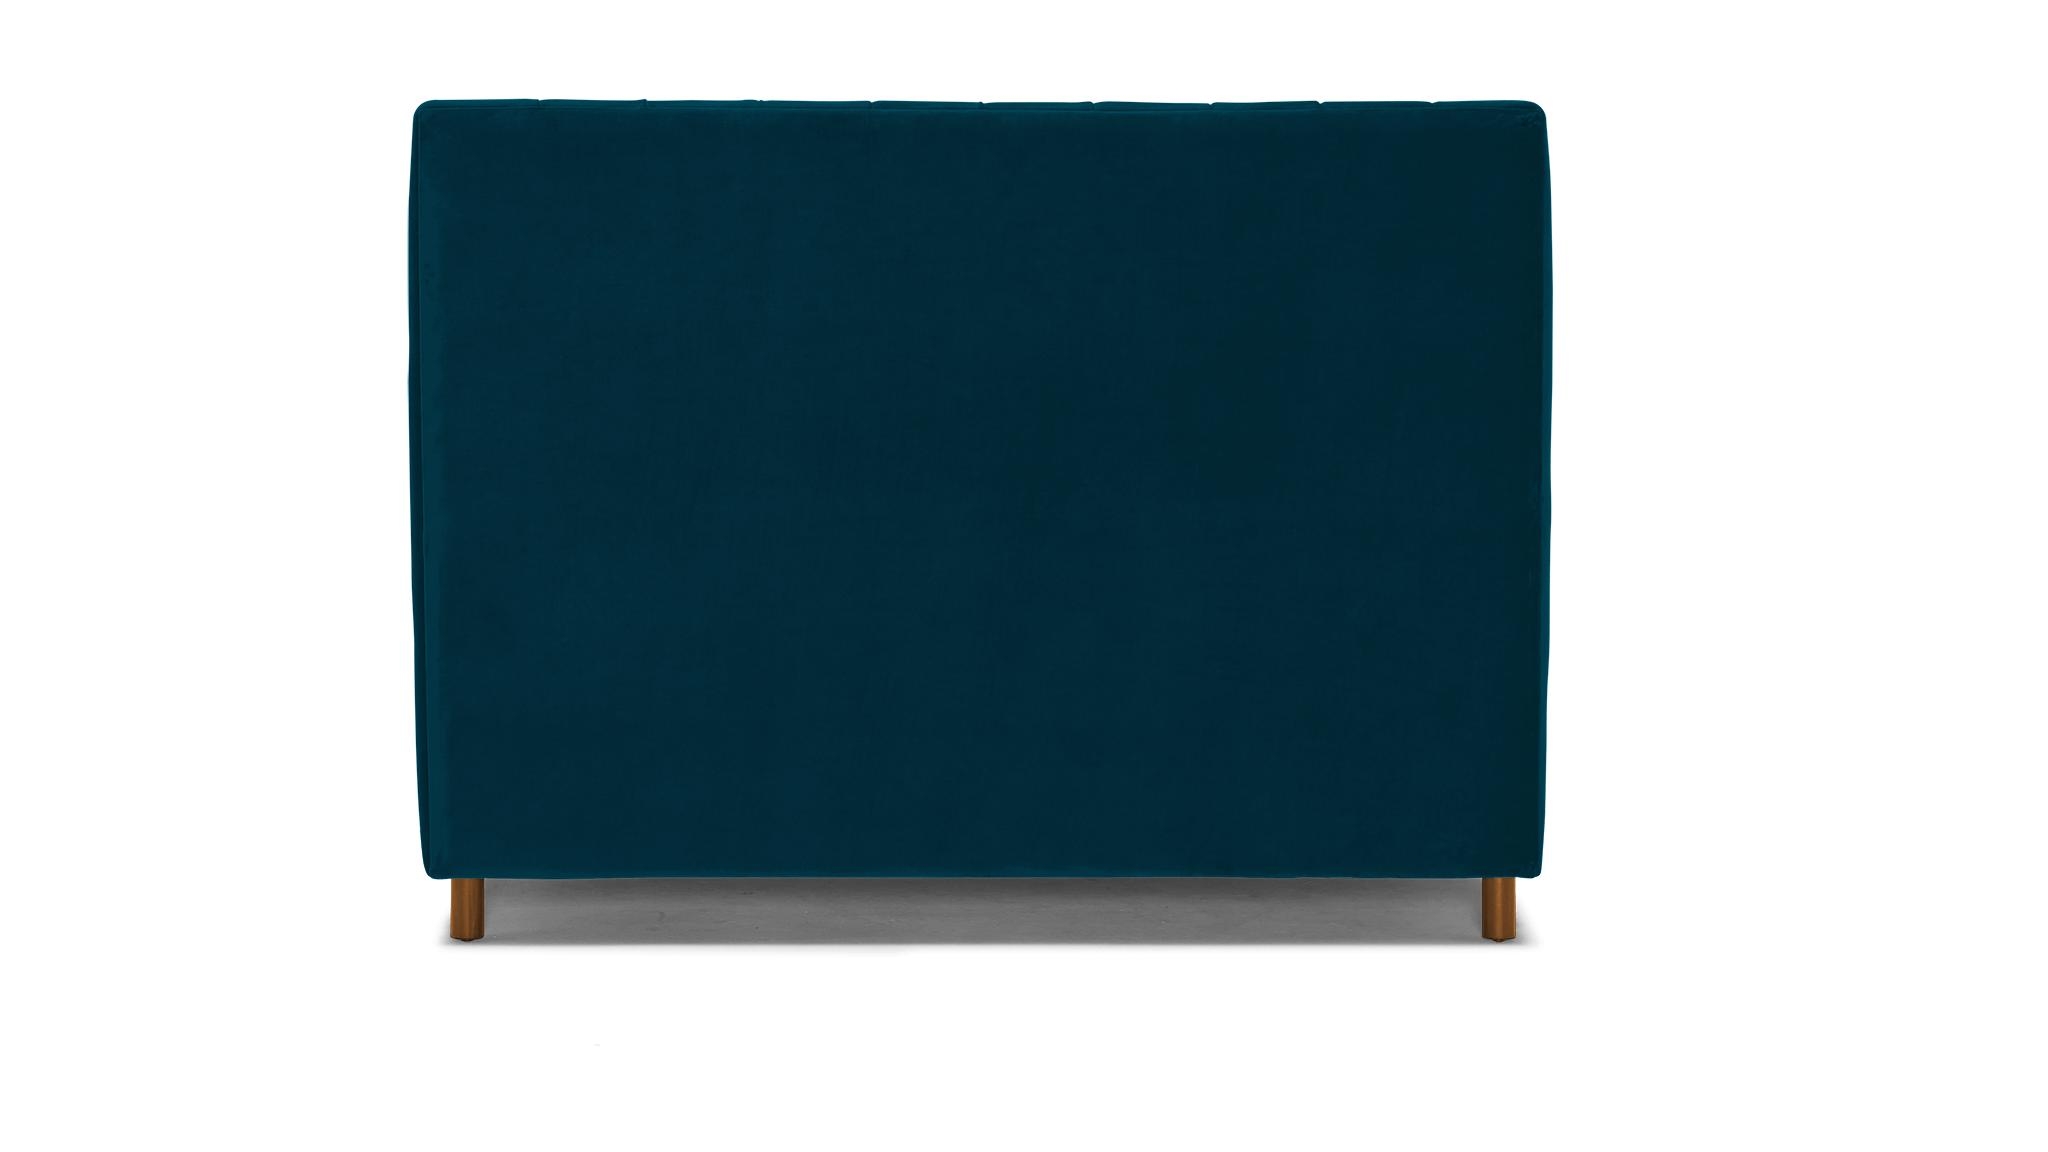 Blue Lotta Mid Century Modern Bed - Key Largo Zenith Teal - Mocha - Queen - Image 4